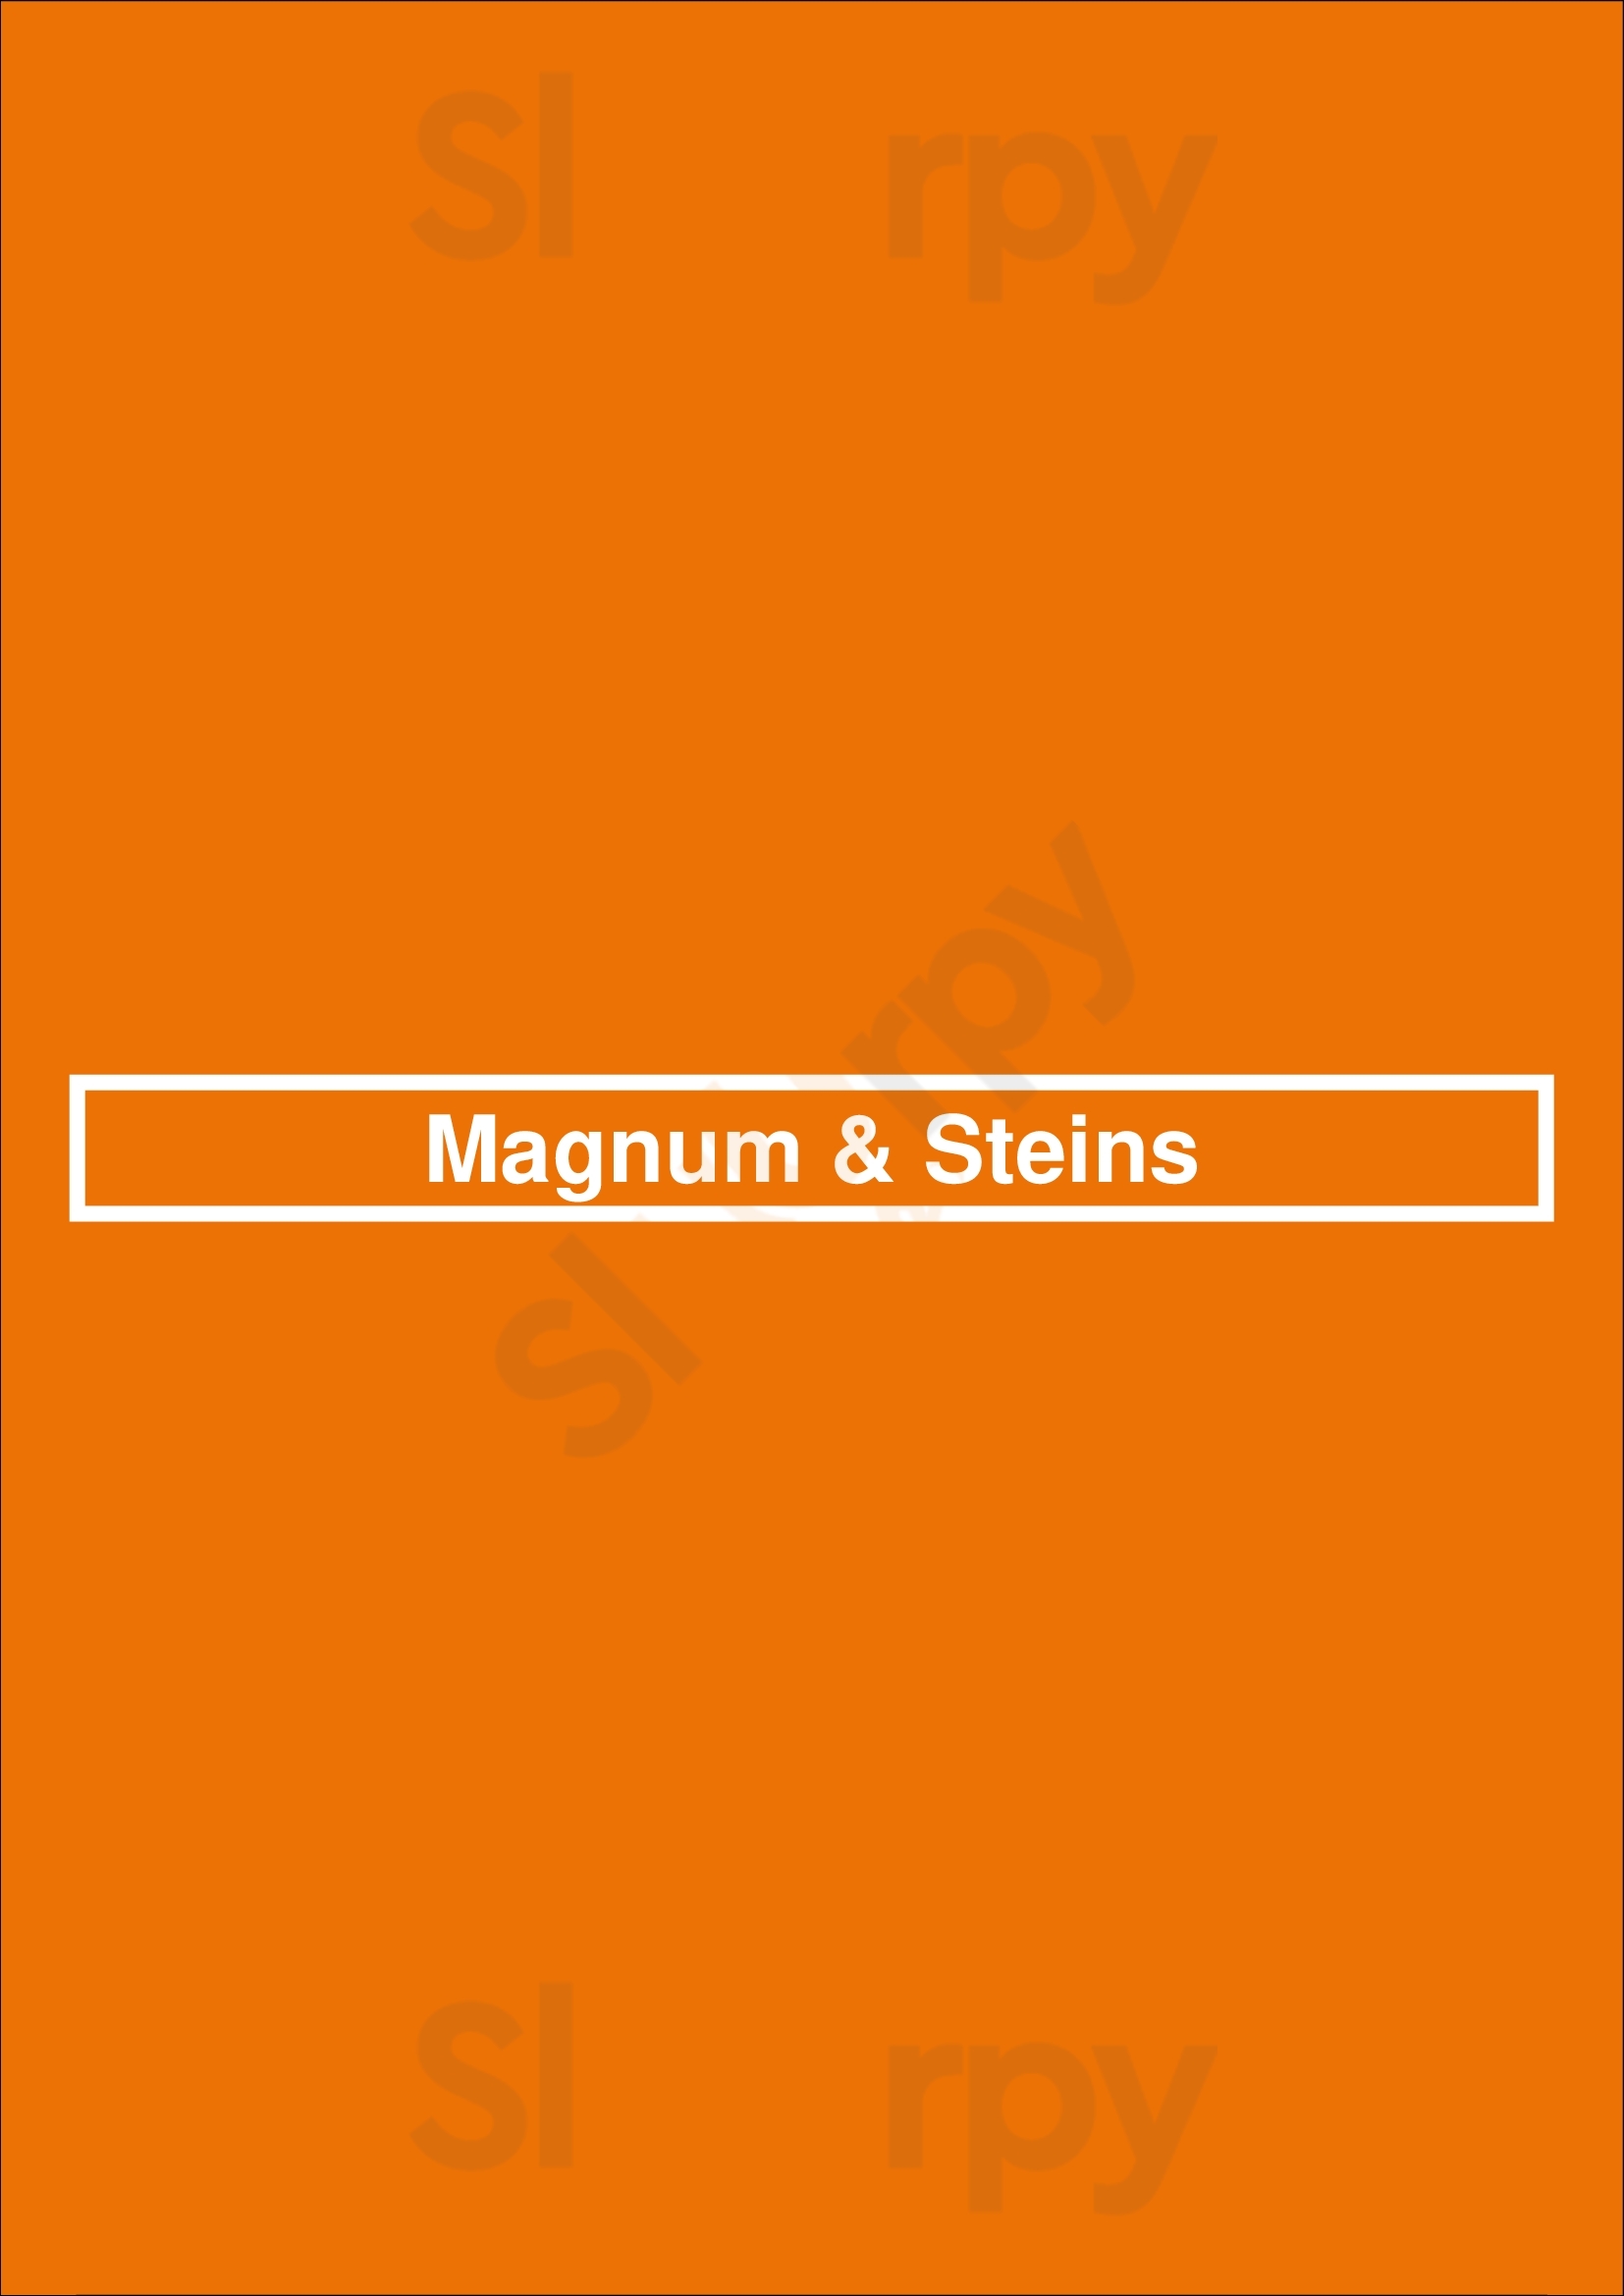 Magnum & Steins St. John's Menu - 1